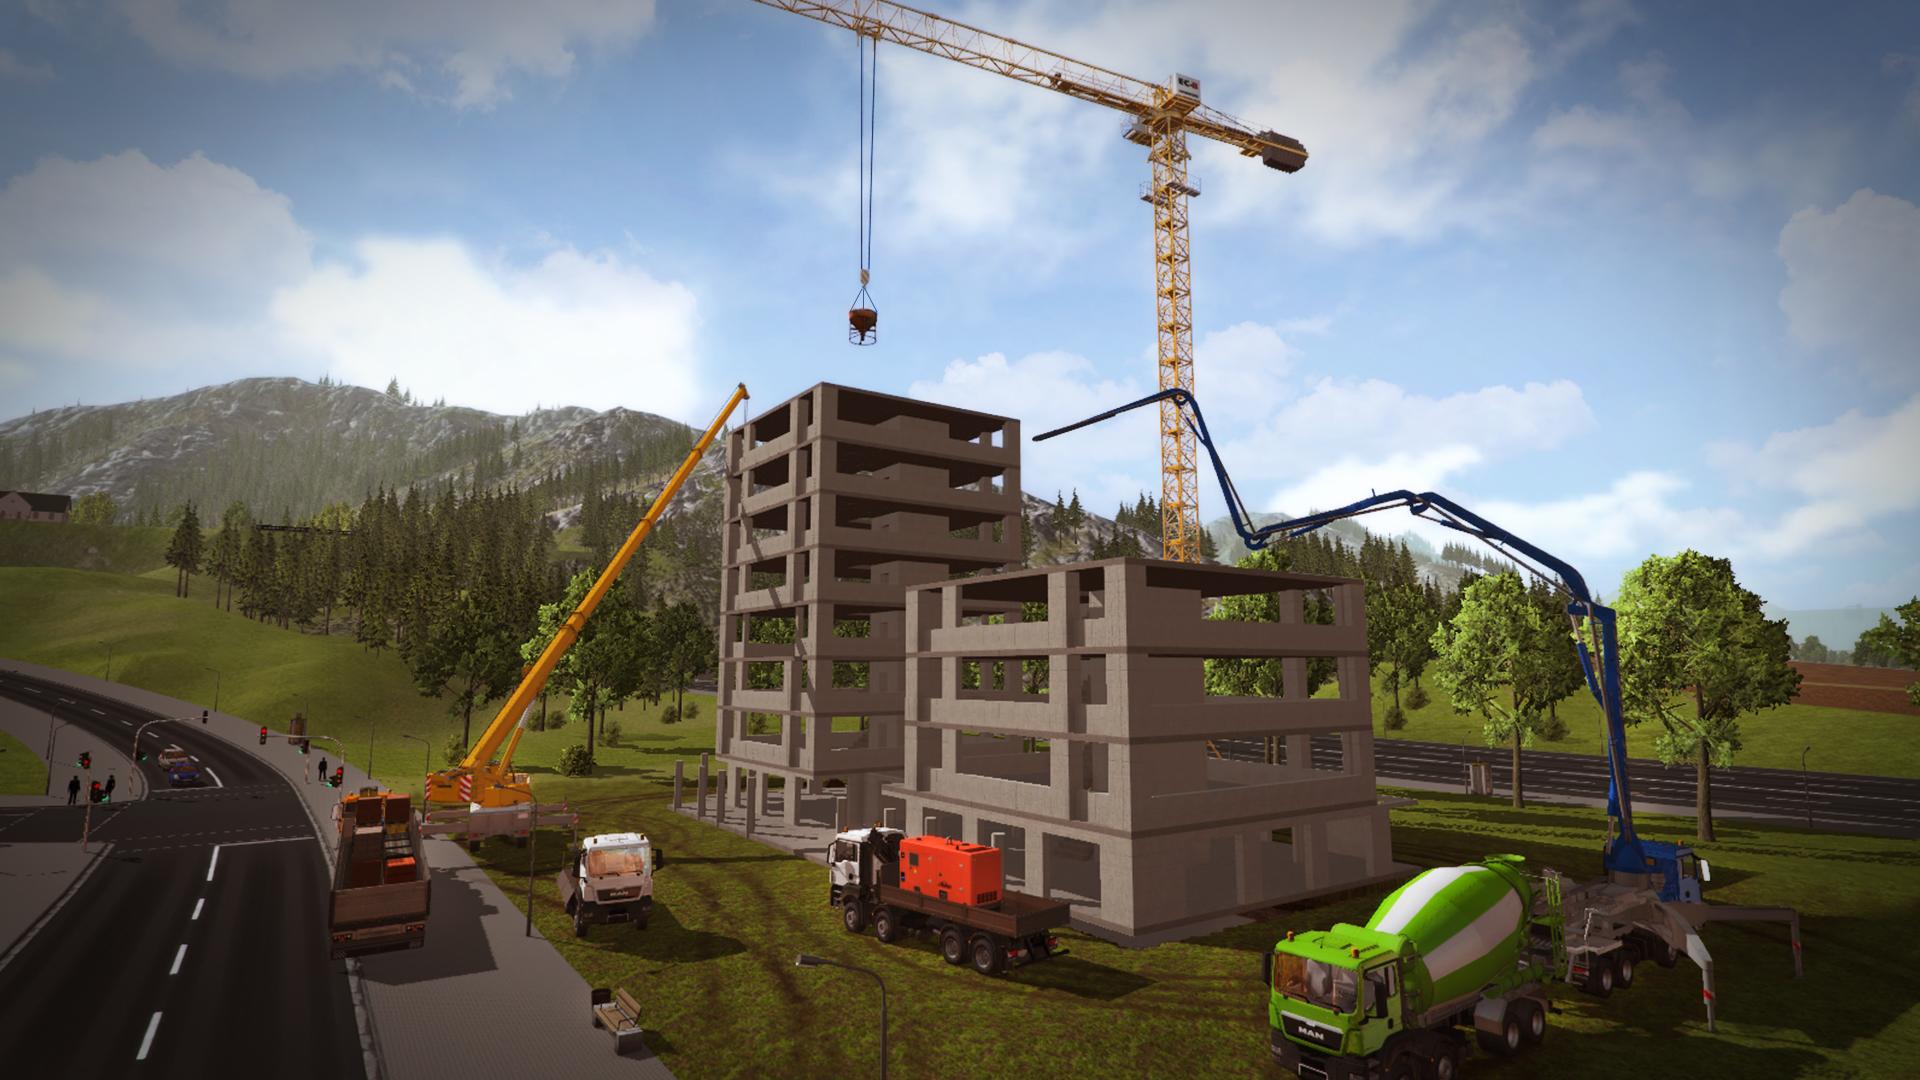 Screenshot №3 from game Construction Simulator 2015